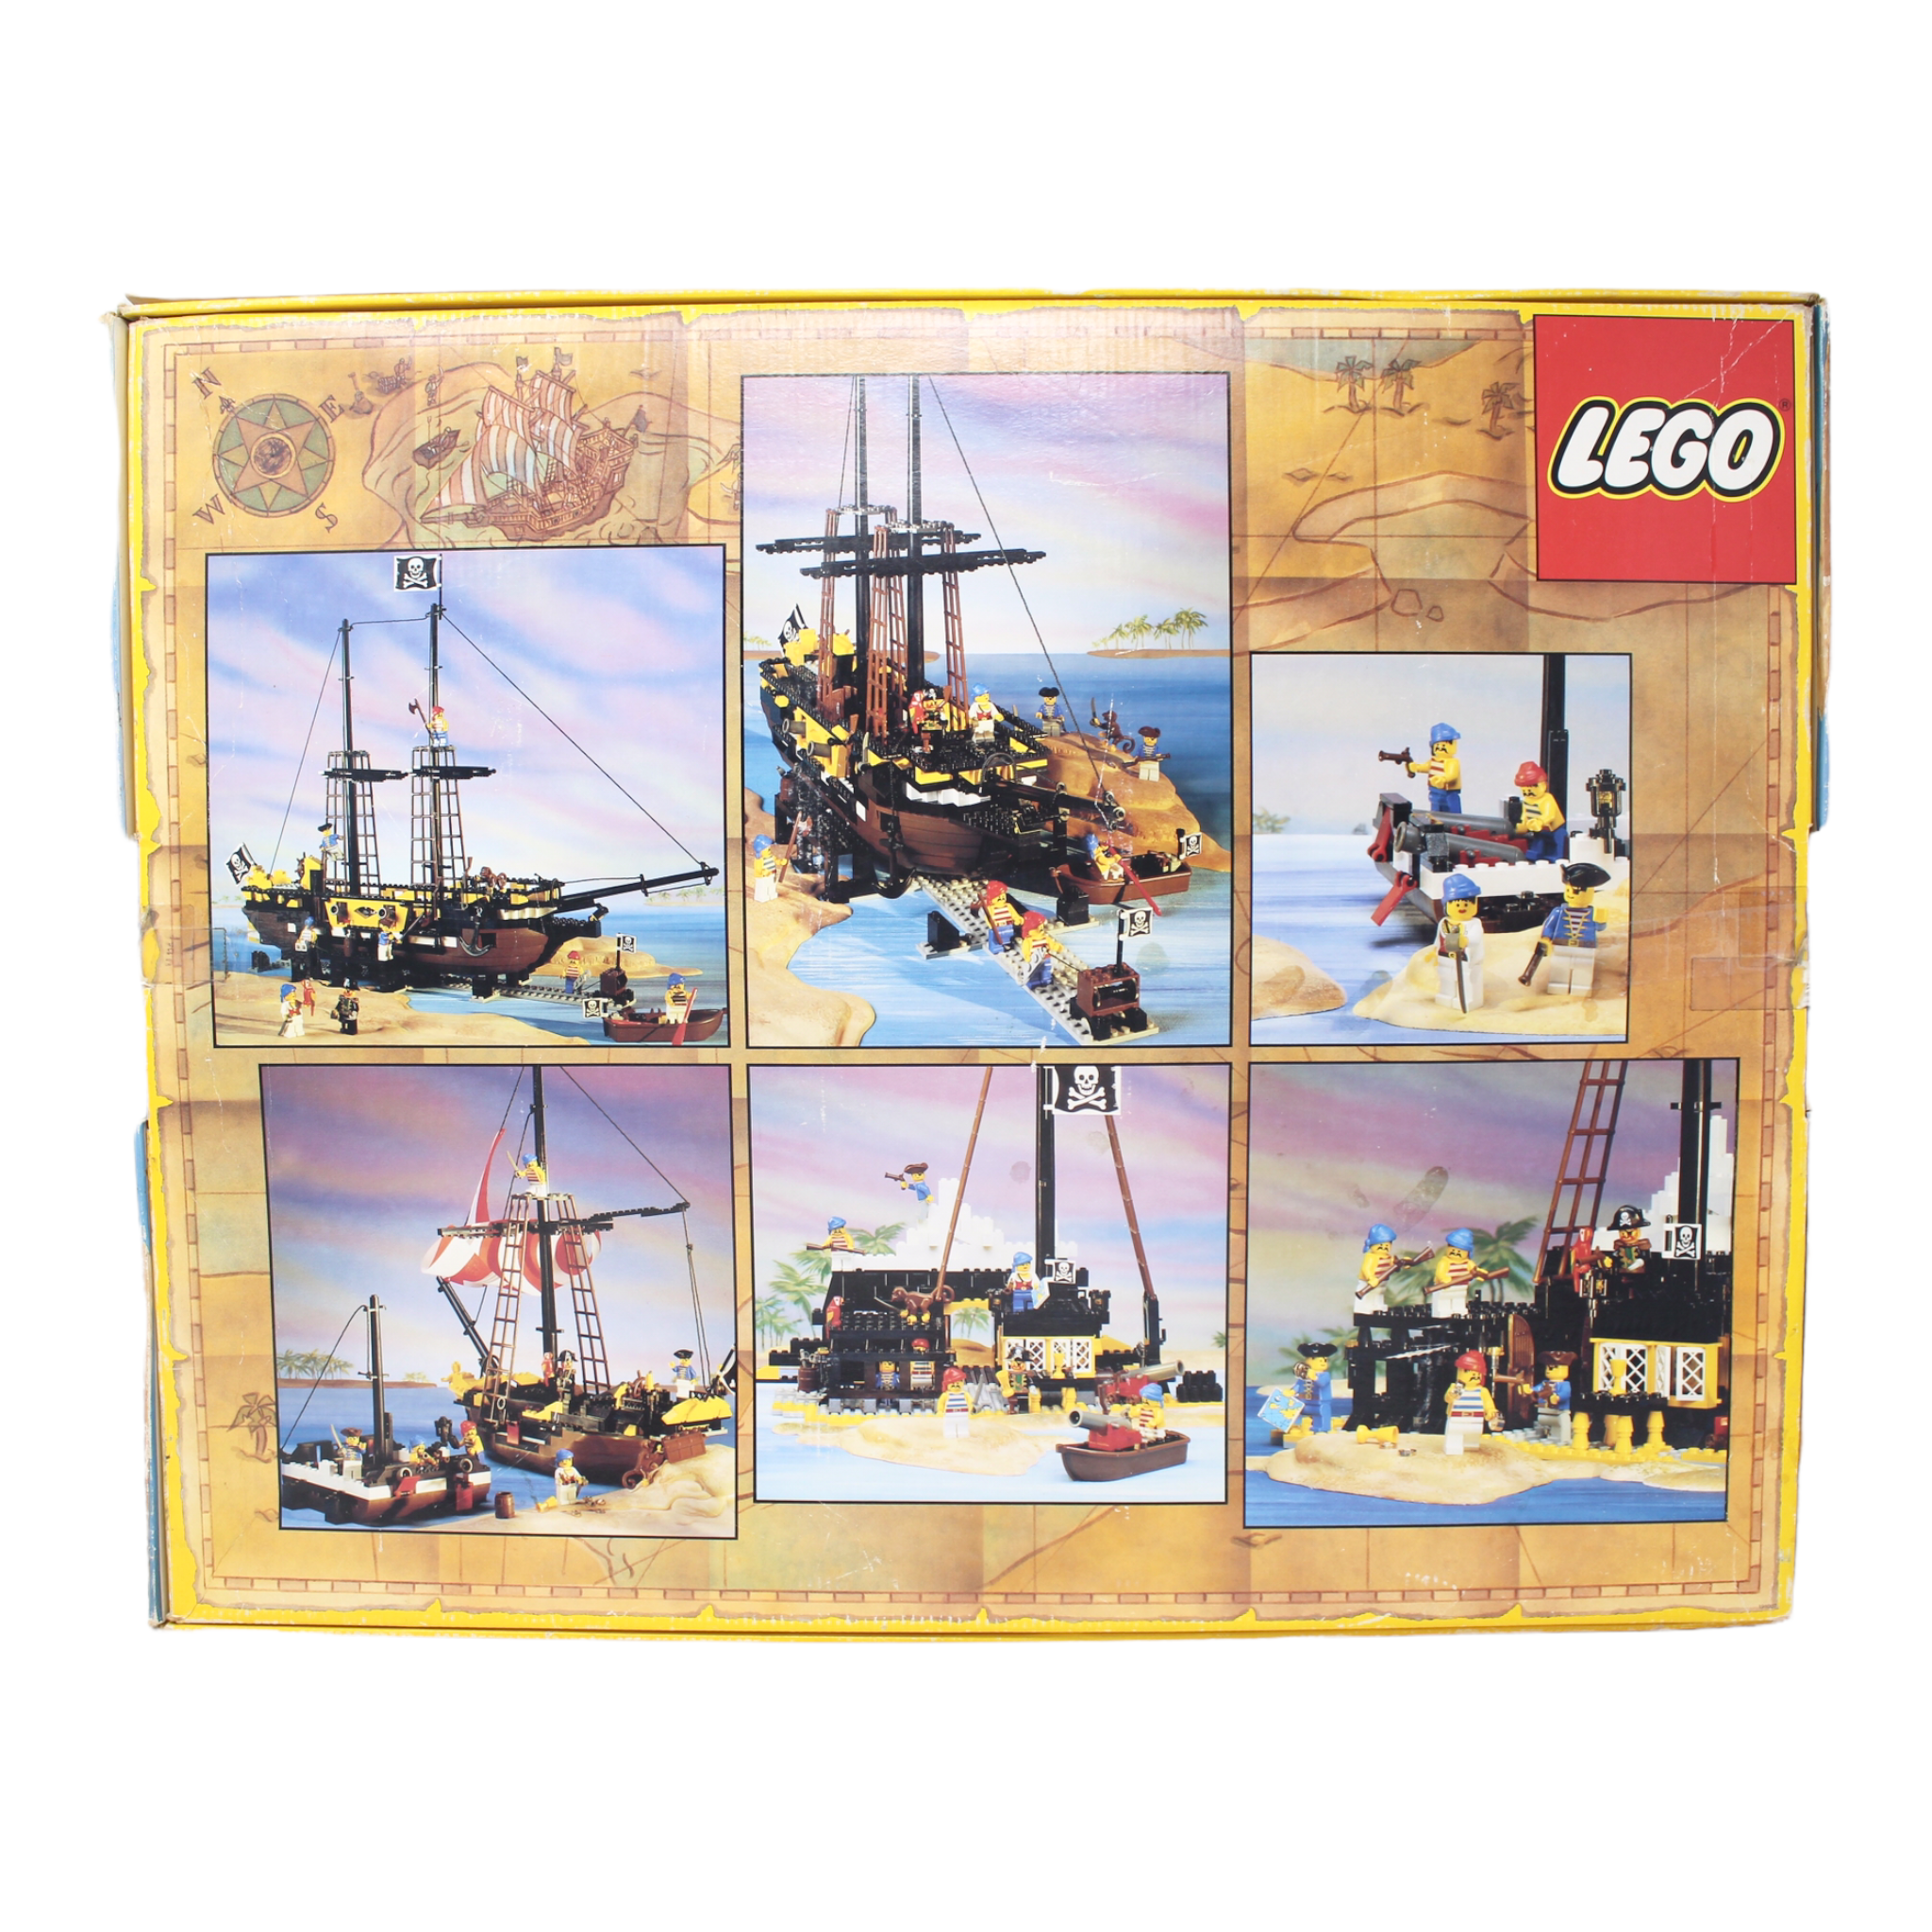 Used 6285 LEGO Black Seas Barracuda